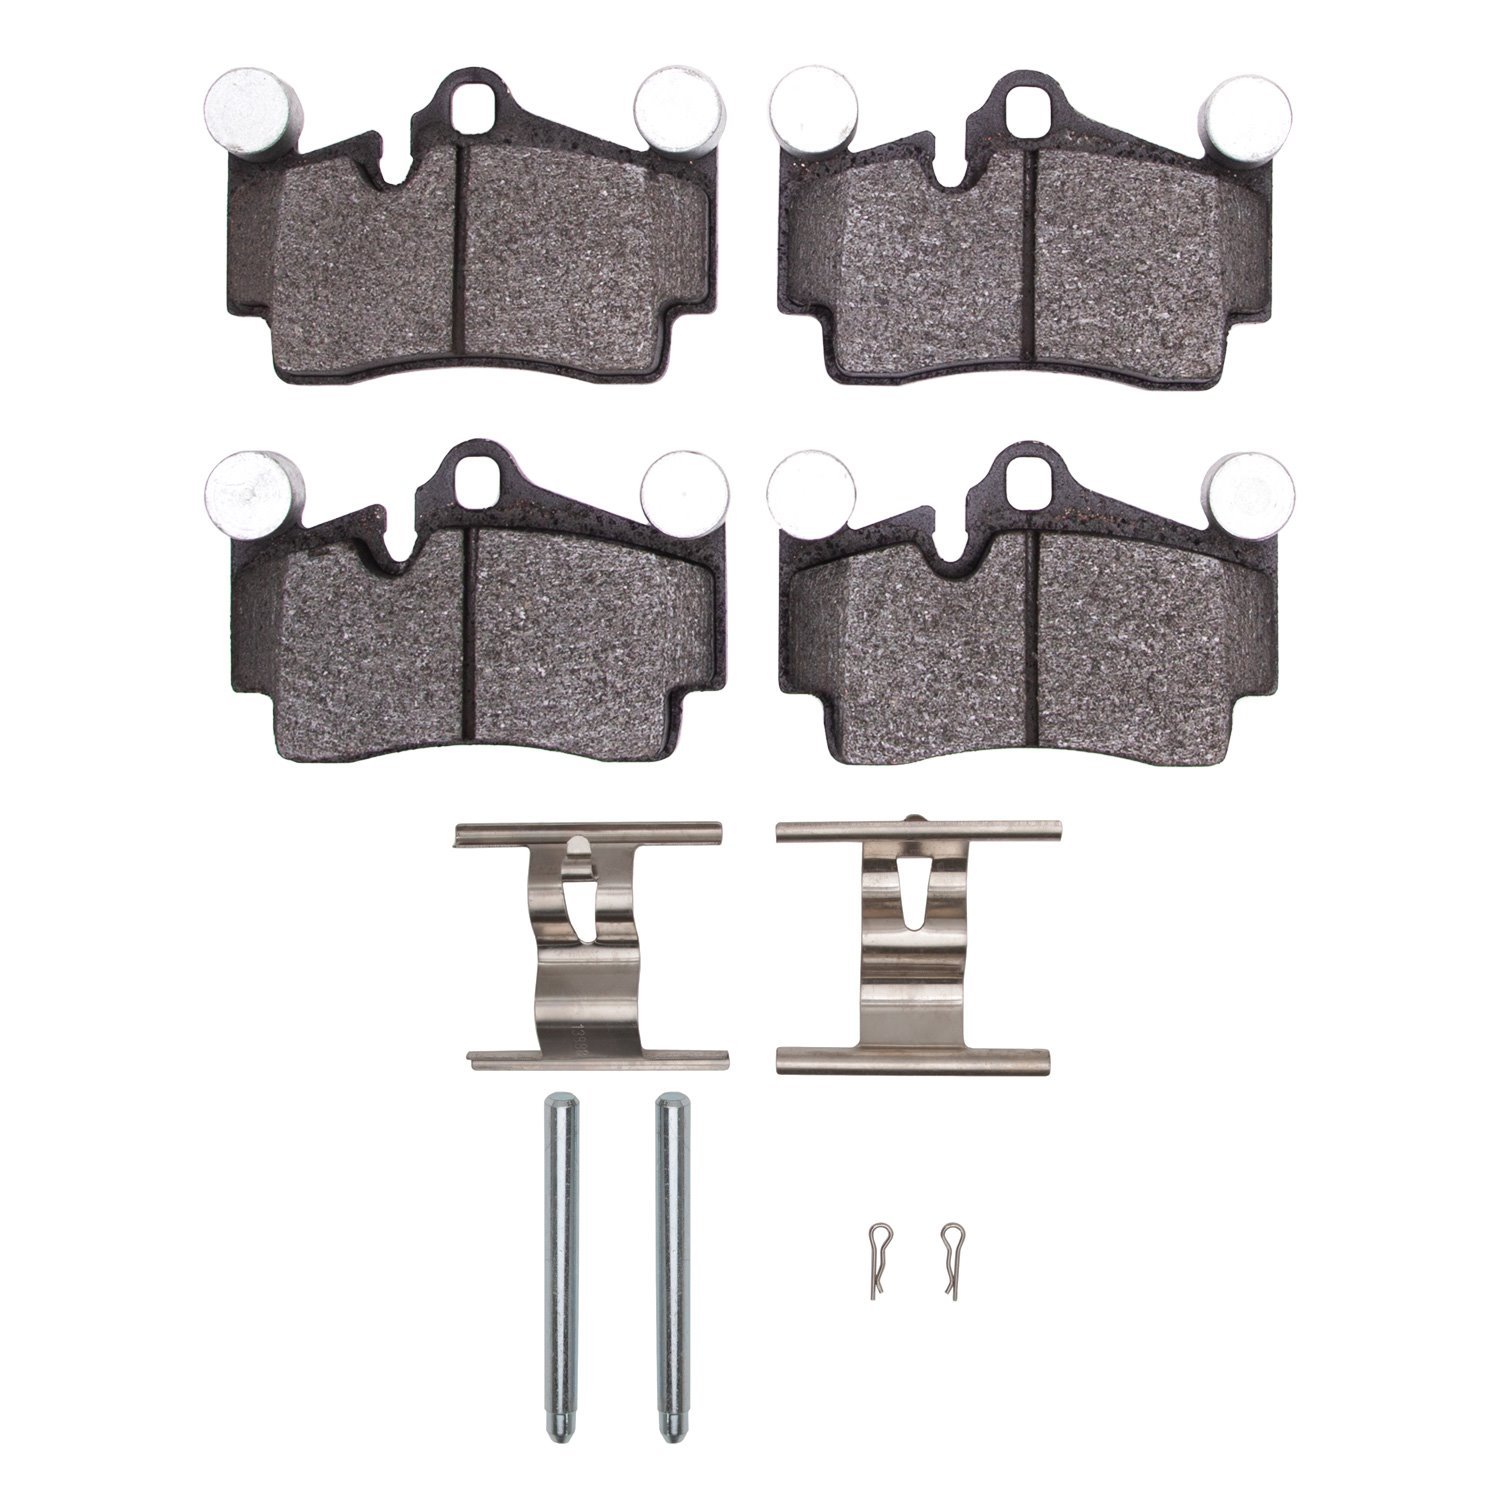 1600-0978-01 5000 Euro Ceramic Brake Pads & Hardware Kit, 2003-2015 Multiple Makes/Models, Position: Rear